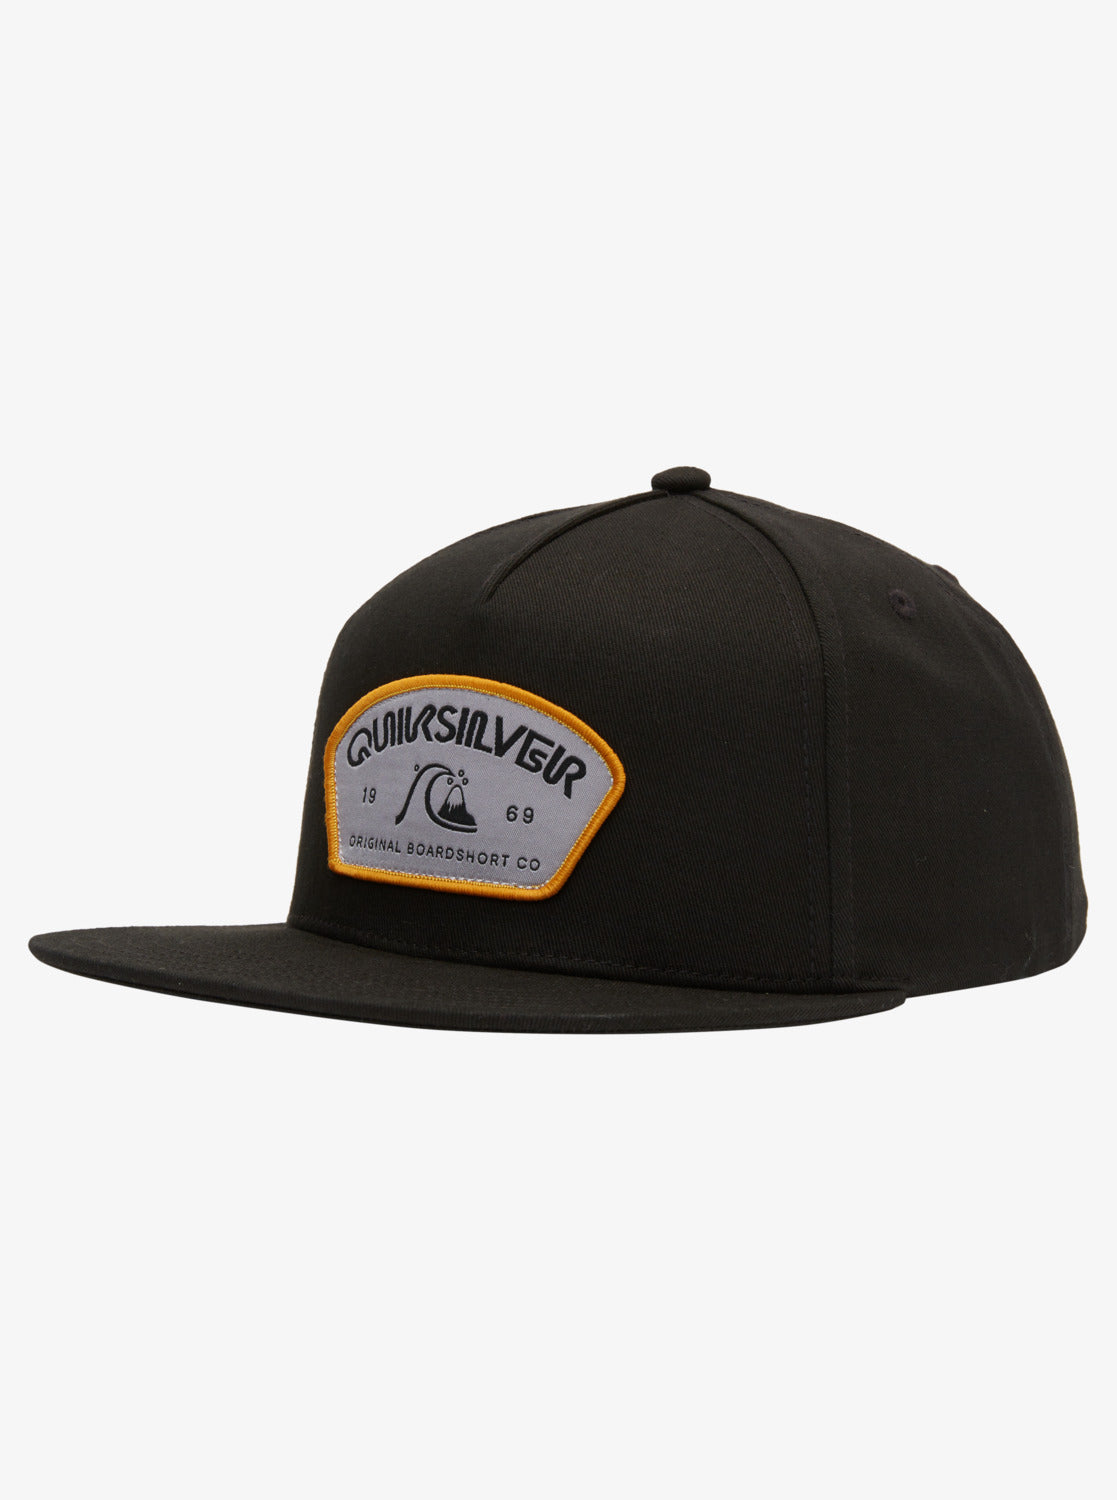 Club Master Snapback Hat - Black